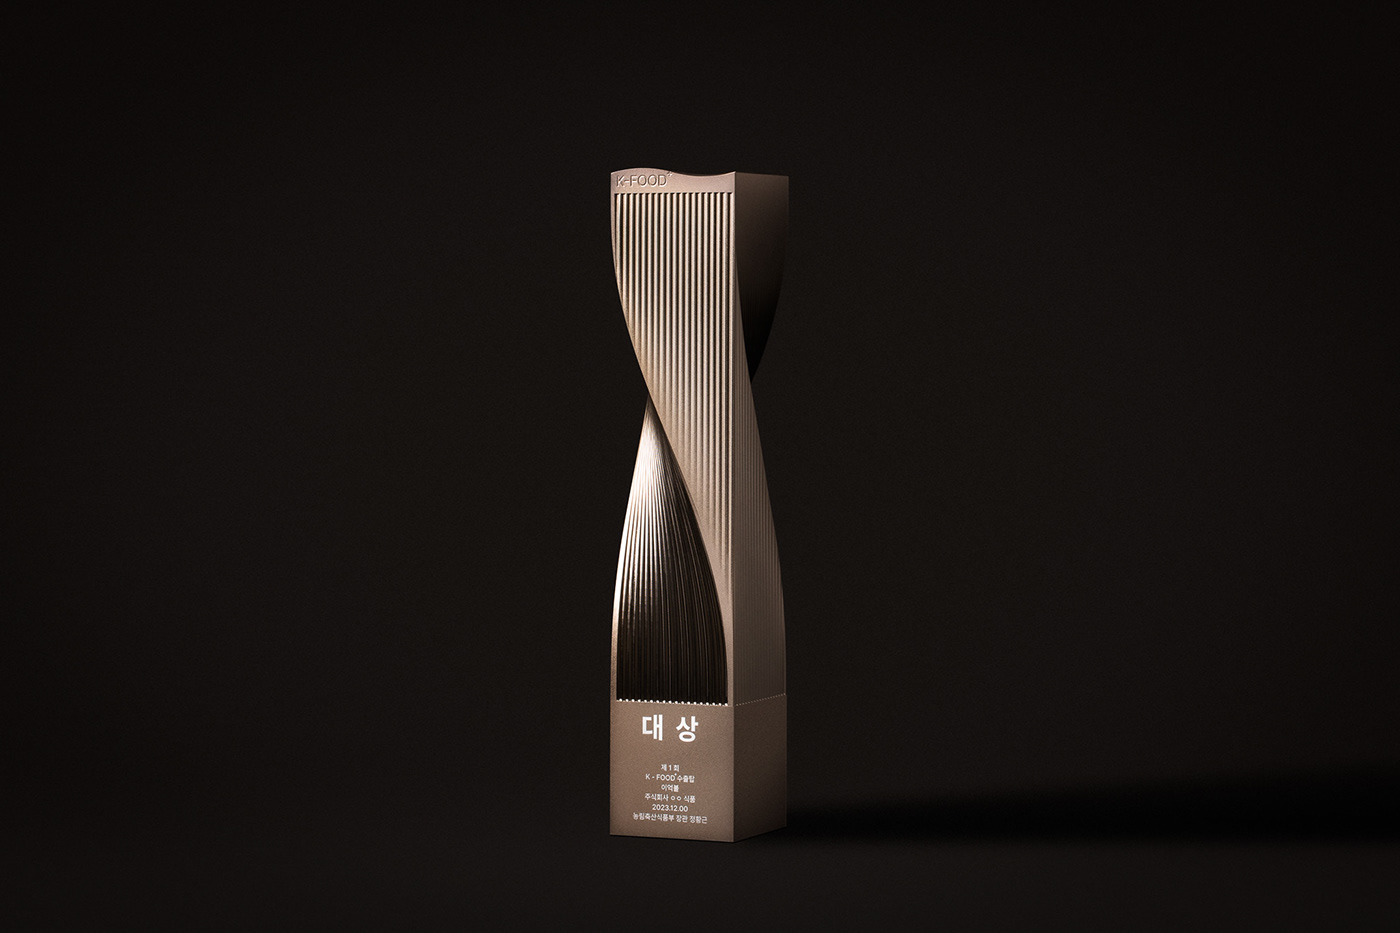 trophy industrial design  product design  kfood Food  kpop Awards branding  graphic design  superkomma